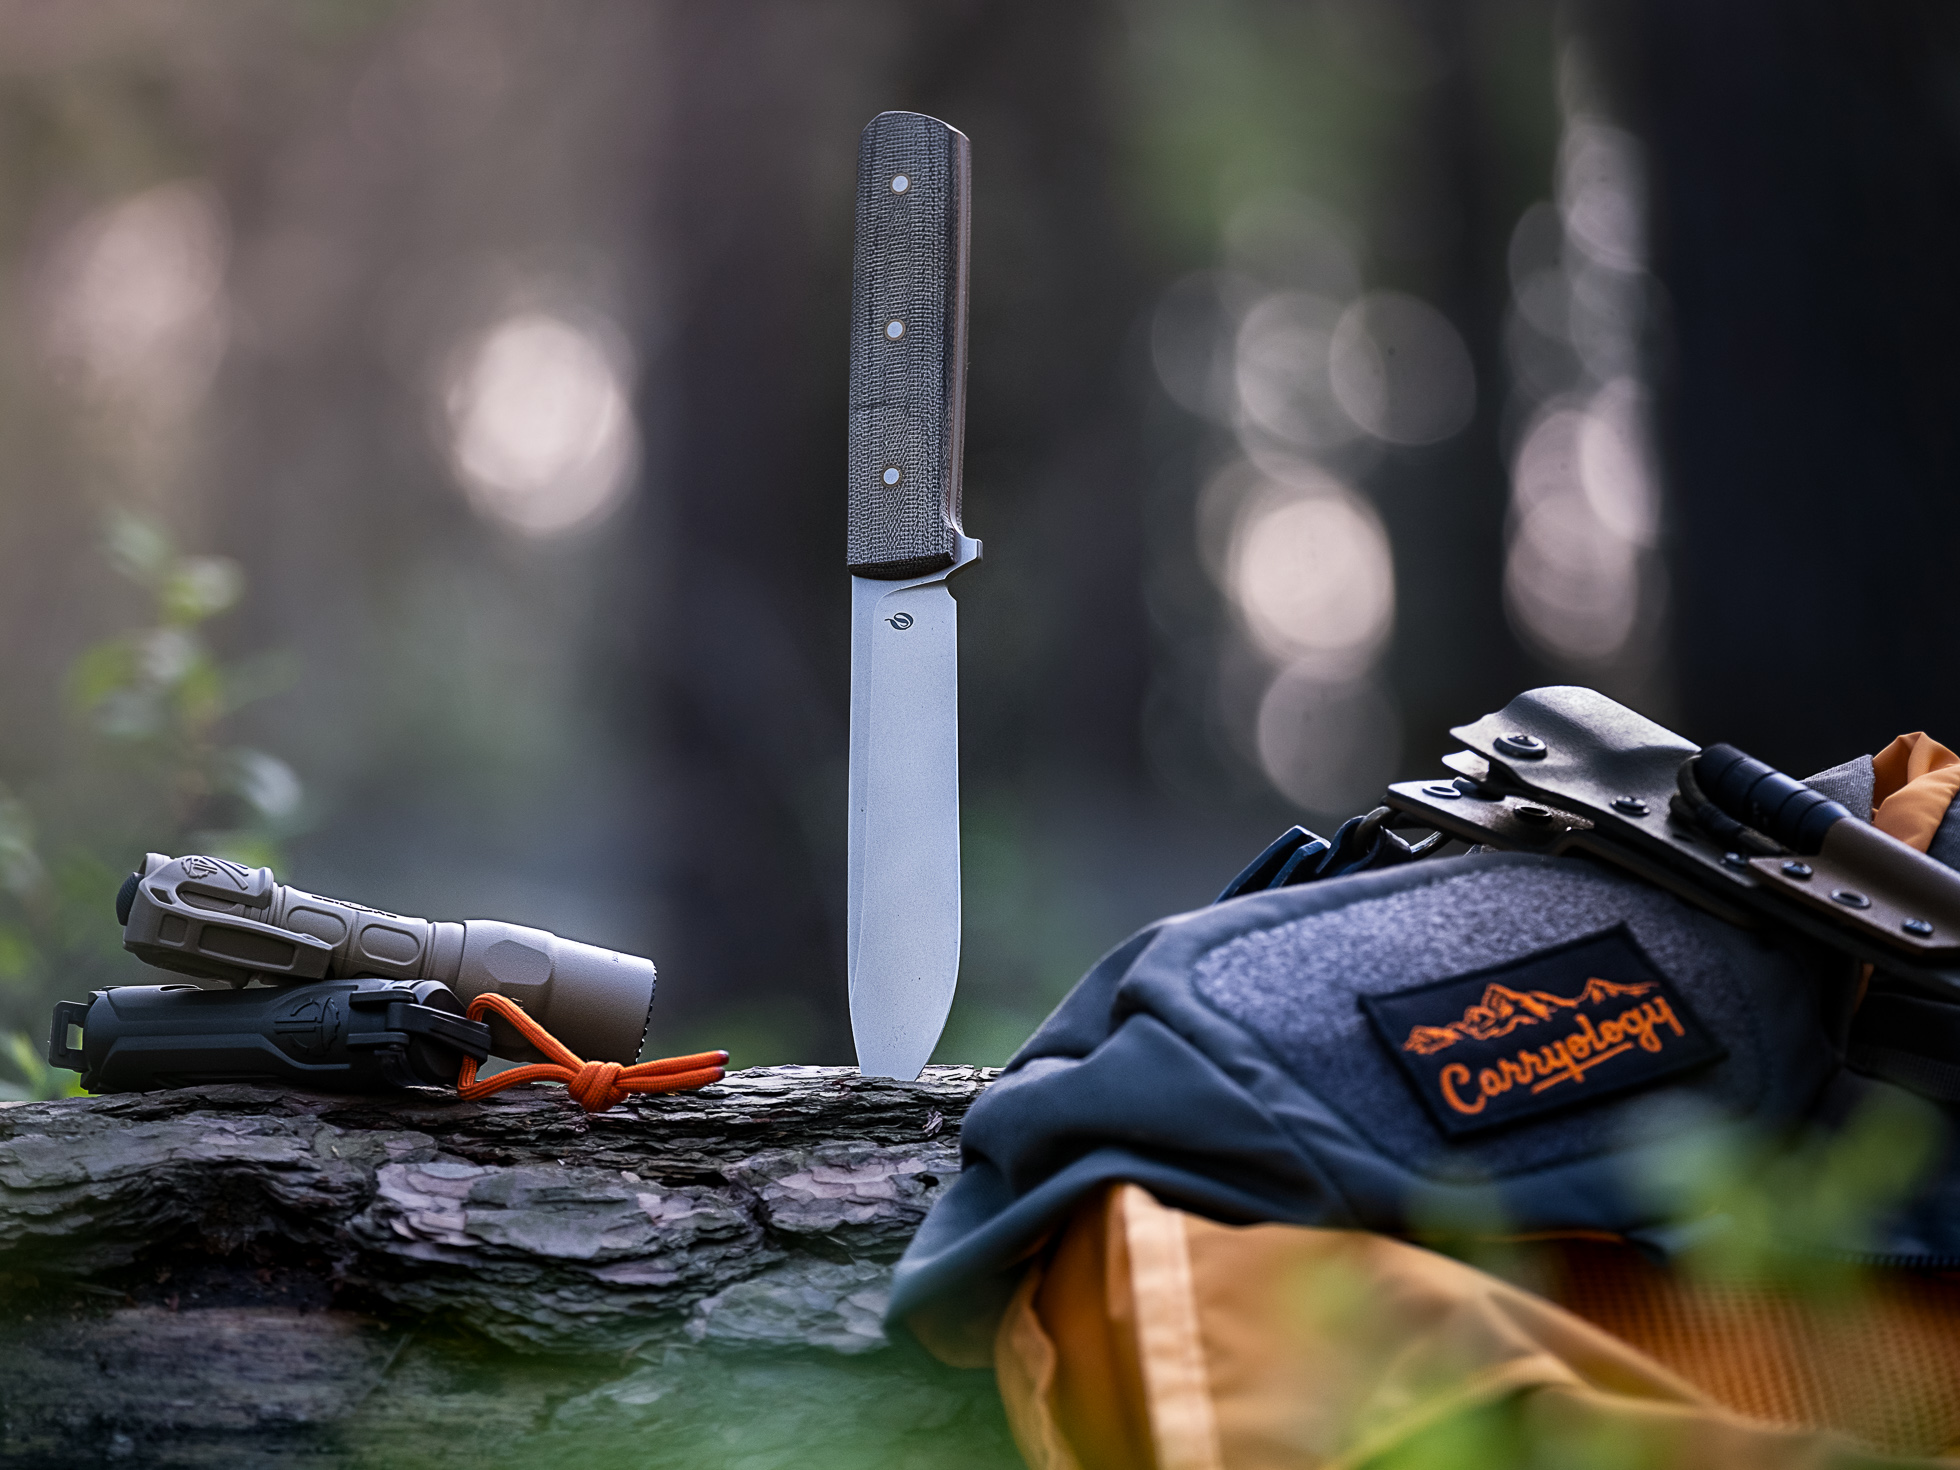 Top 5 Camp Knives for Five Outdoor Scenarios This Autumn 